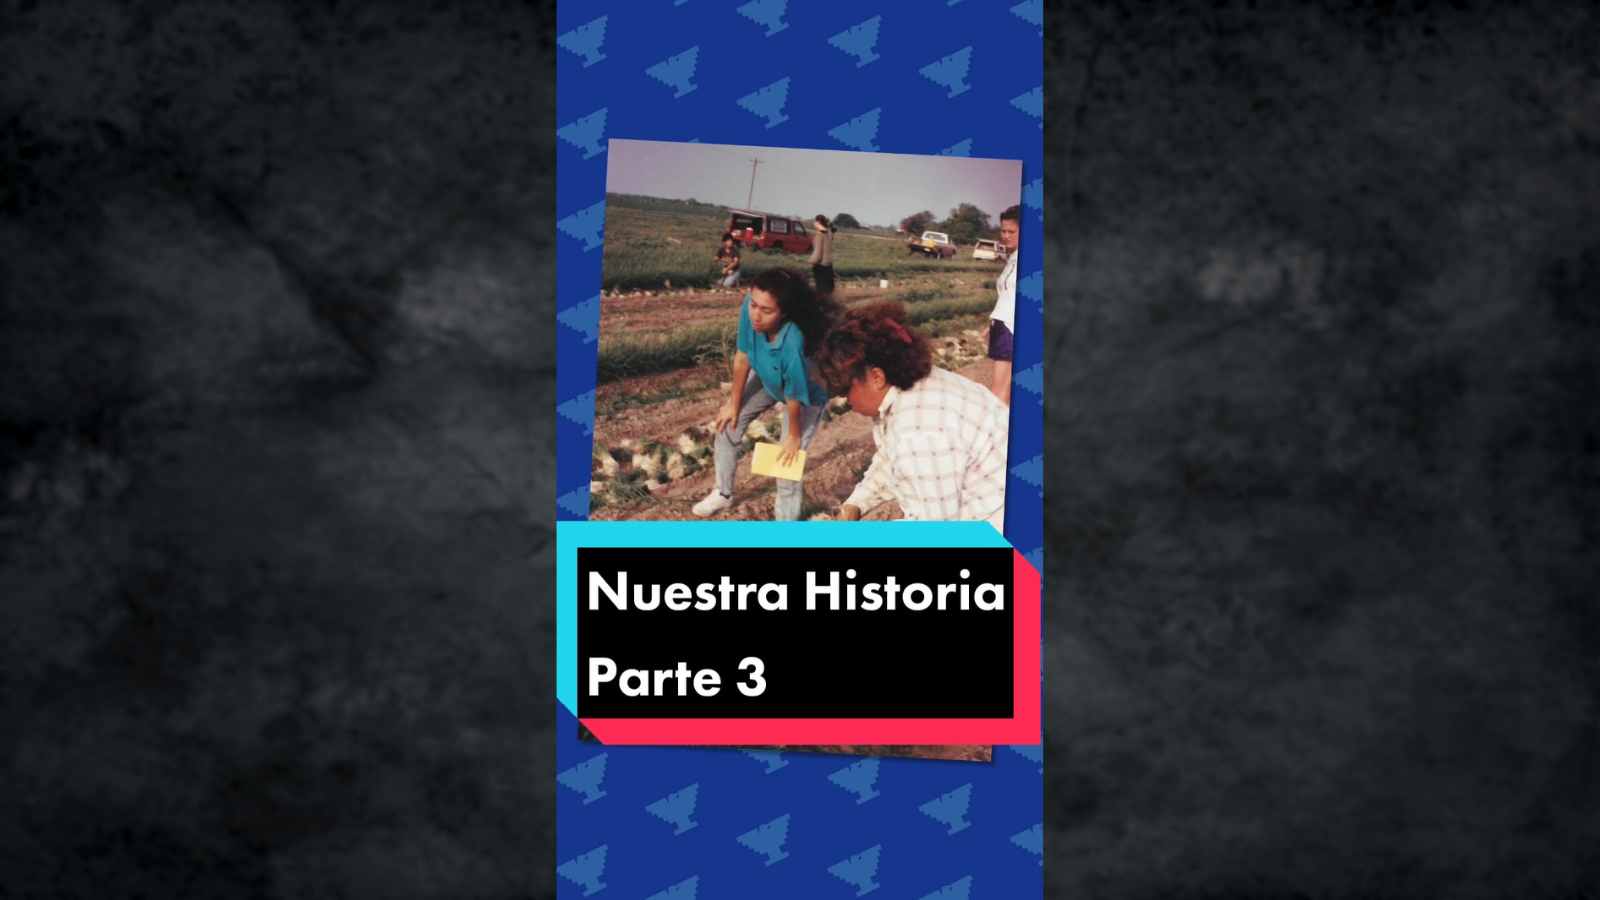 Featured image for “‘Nuestra Historia’ Episodio 3”